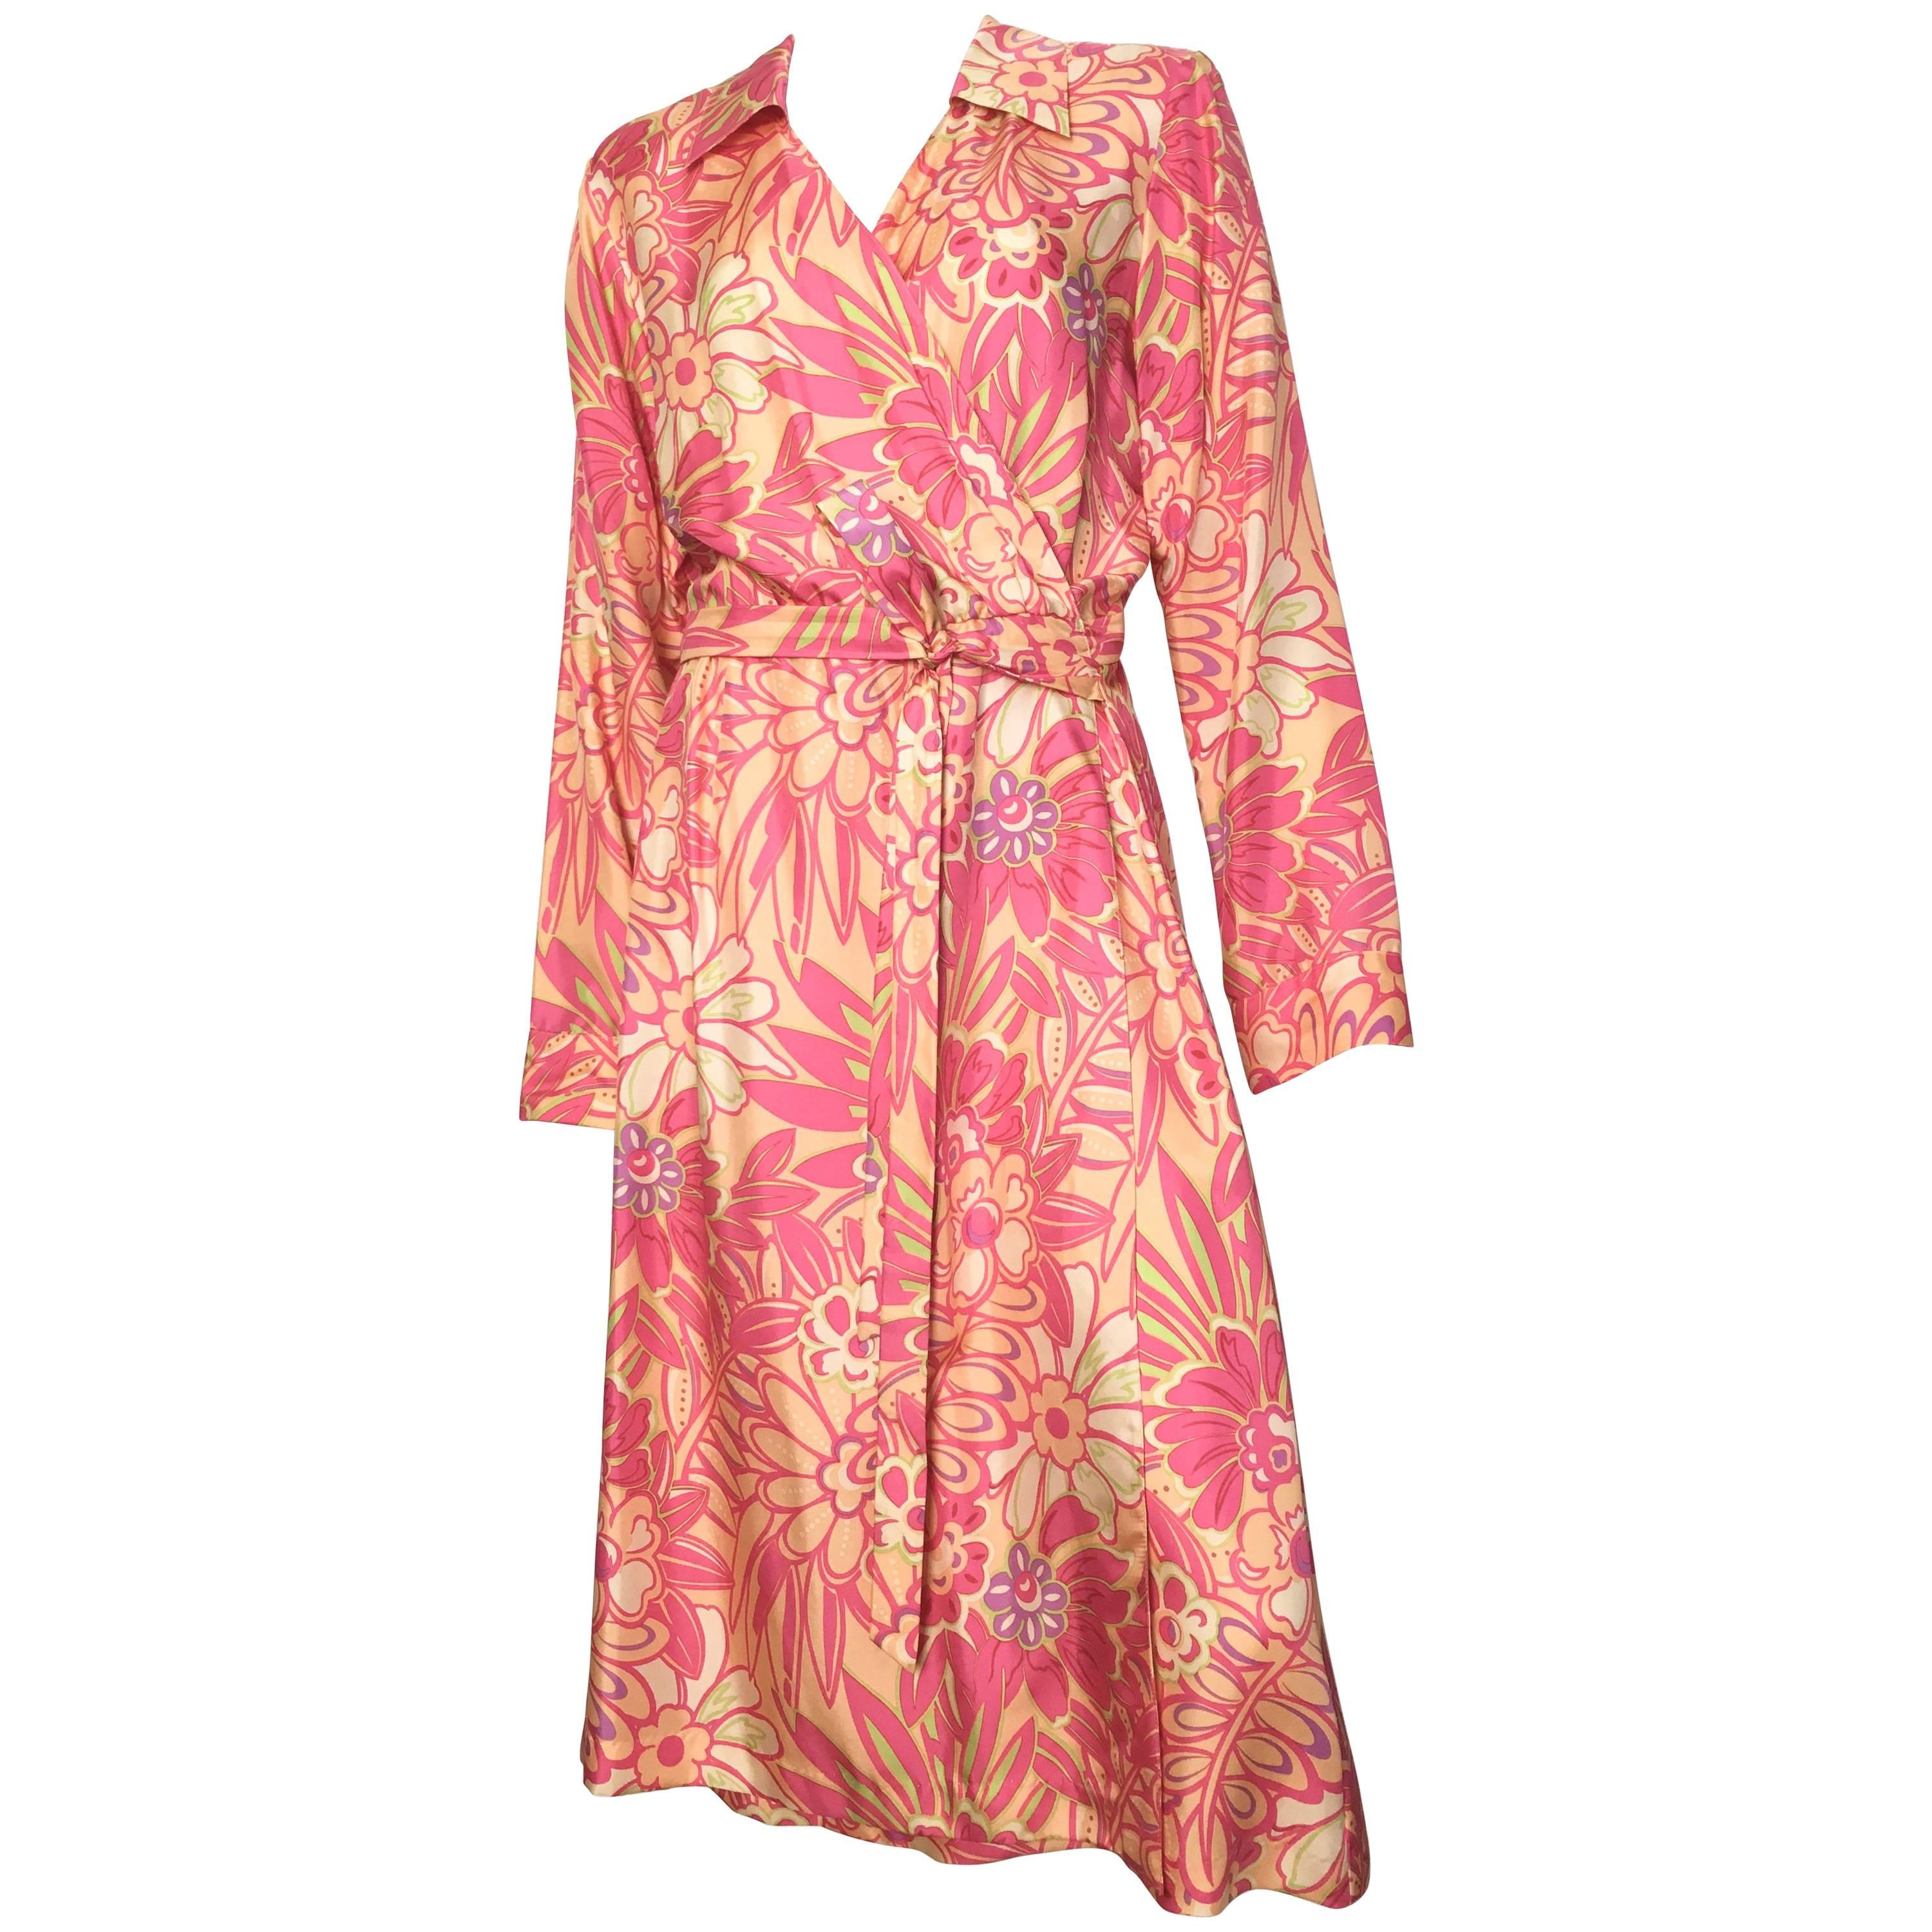 Bob Mackie Floral Silk Wrap Dress Size 14 / 16.